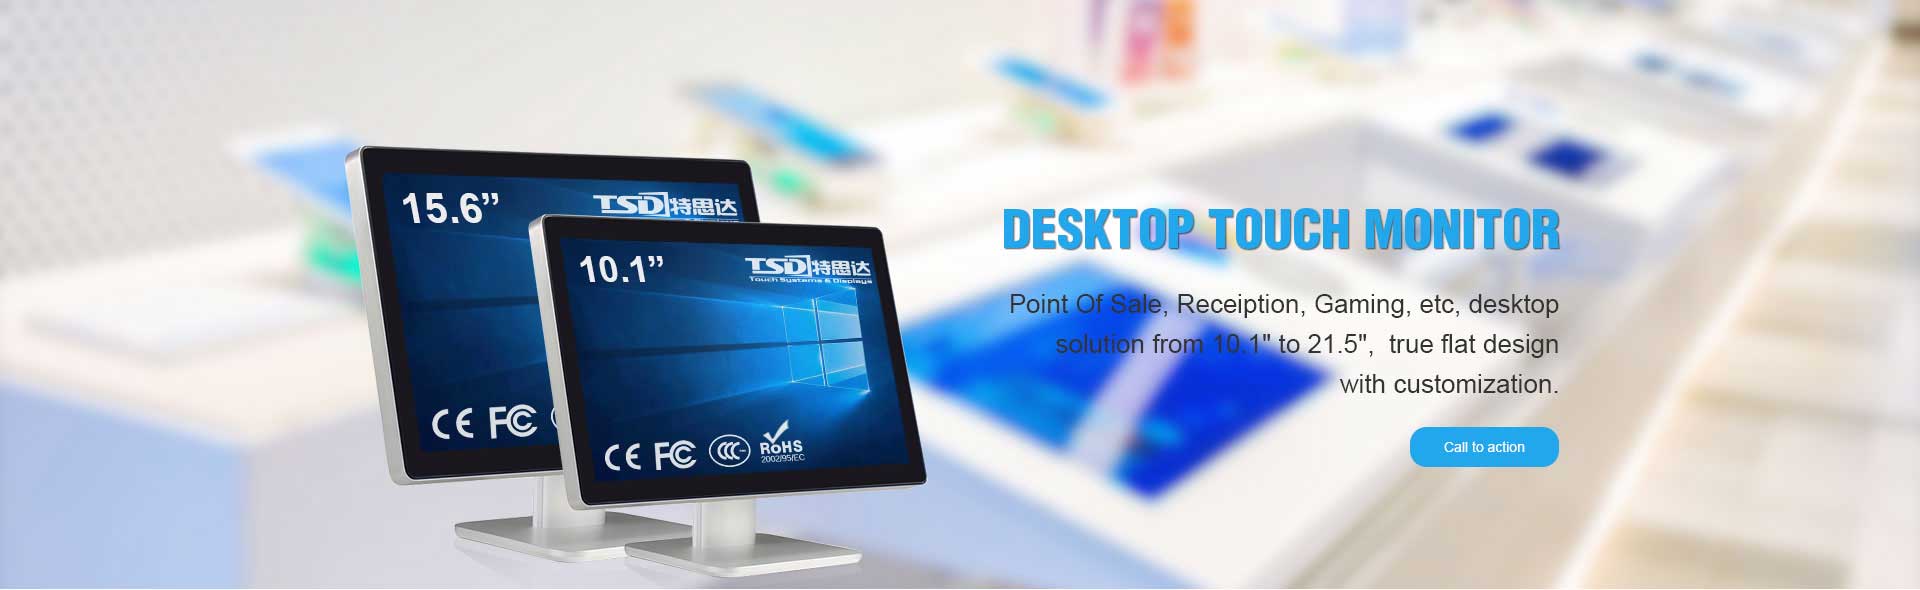 Desktop Touch Monitor